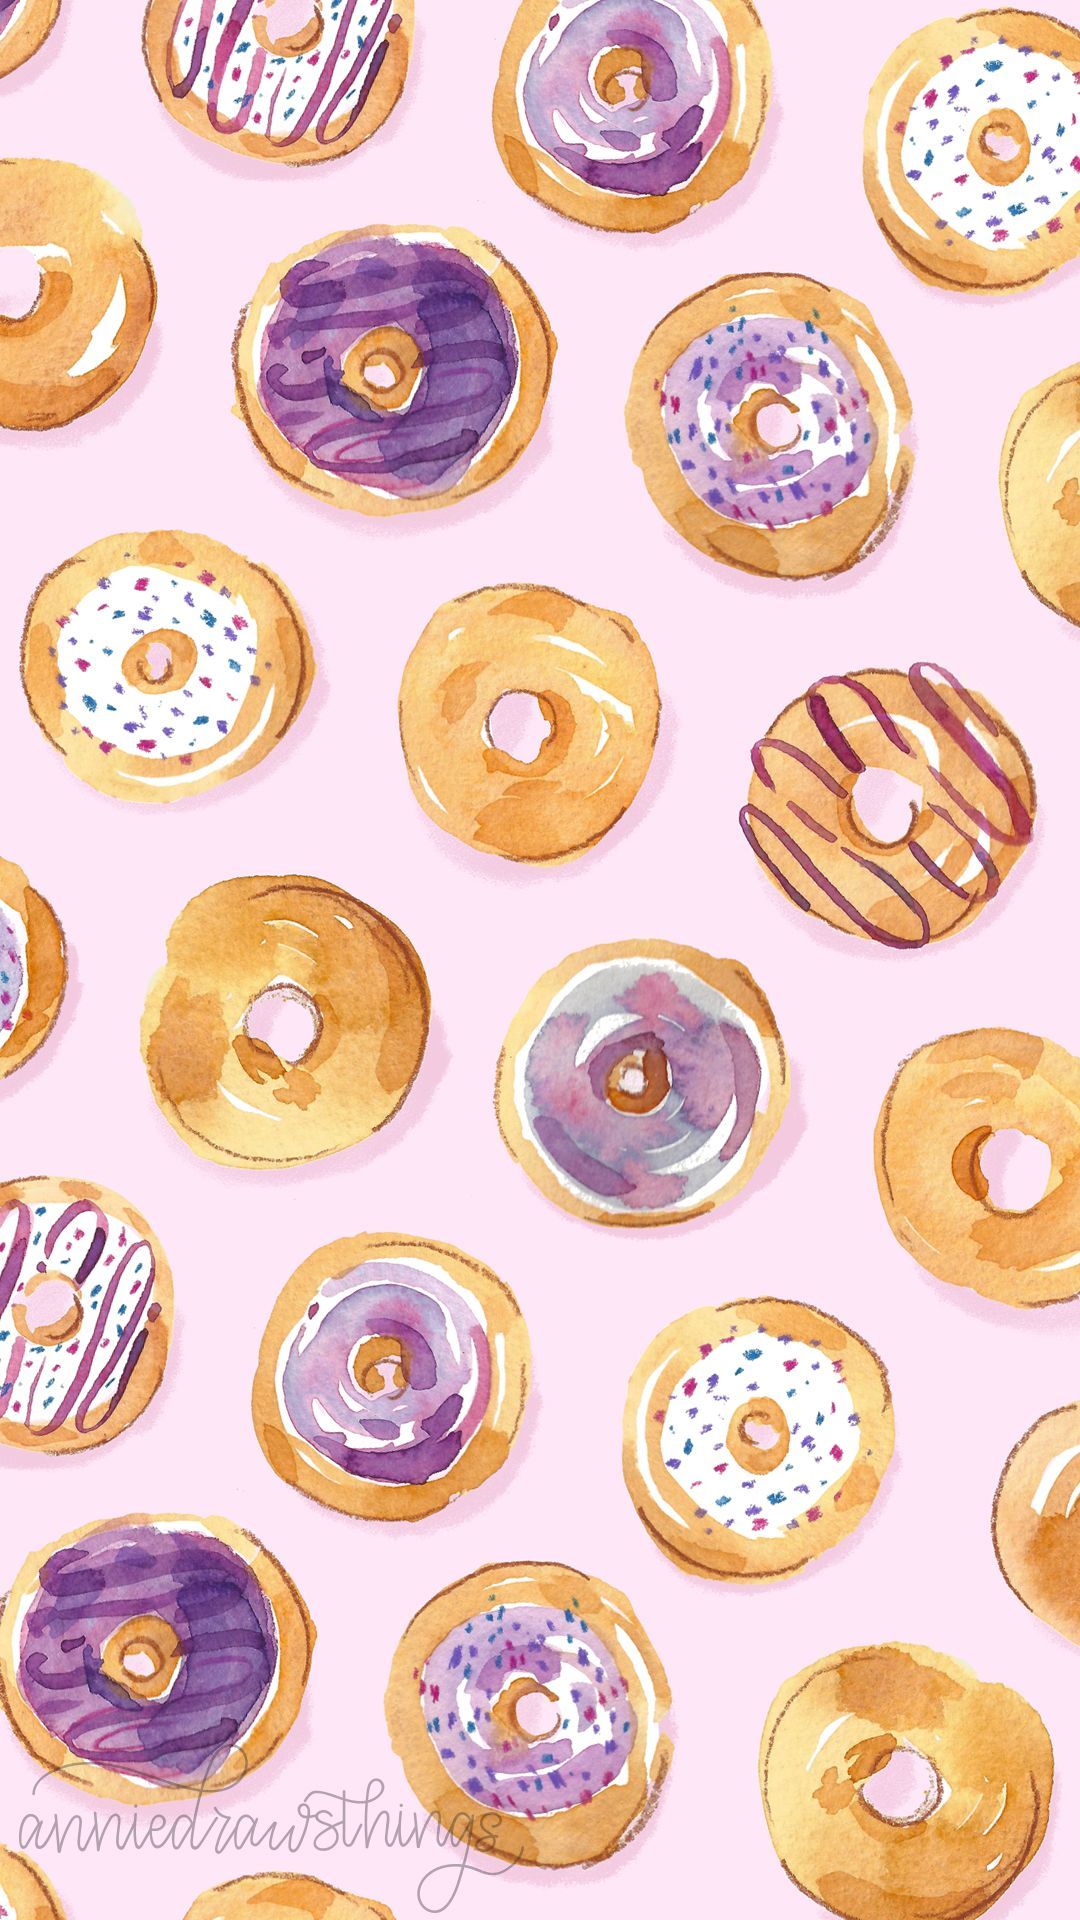 Cute Watercolor Donut Wallpaper Parsons. Donut wallpaper, Cute watercolor, Donut drawing